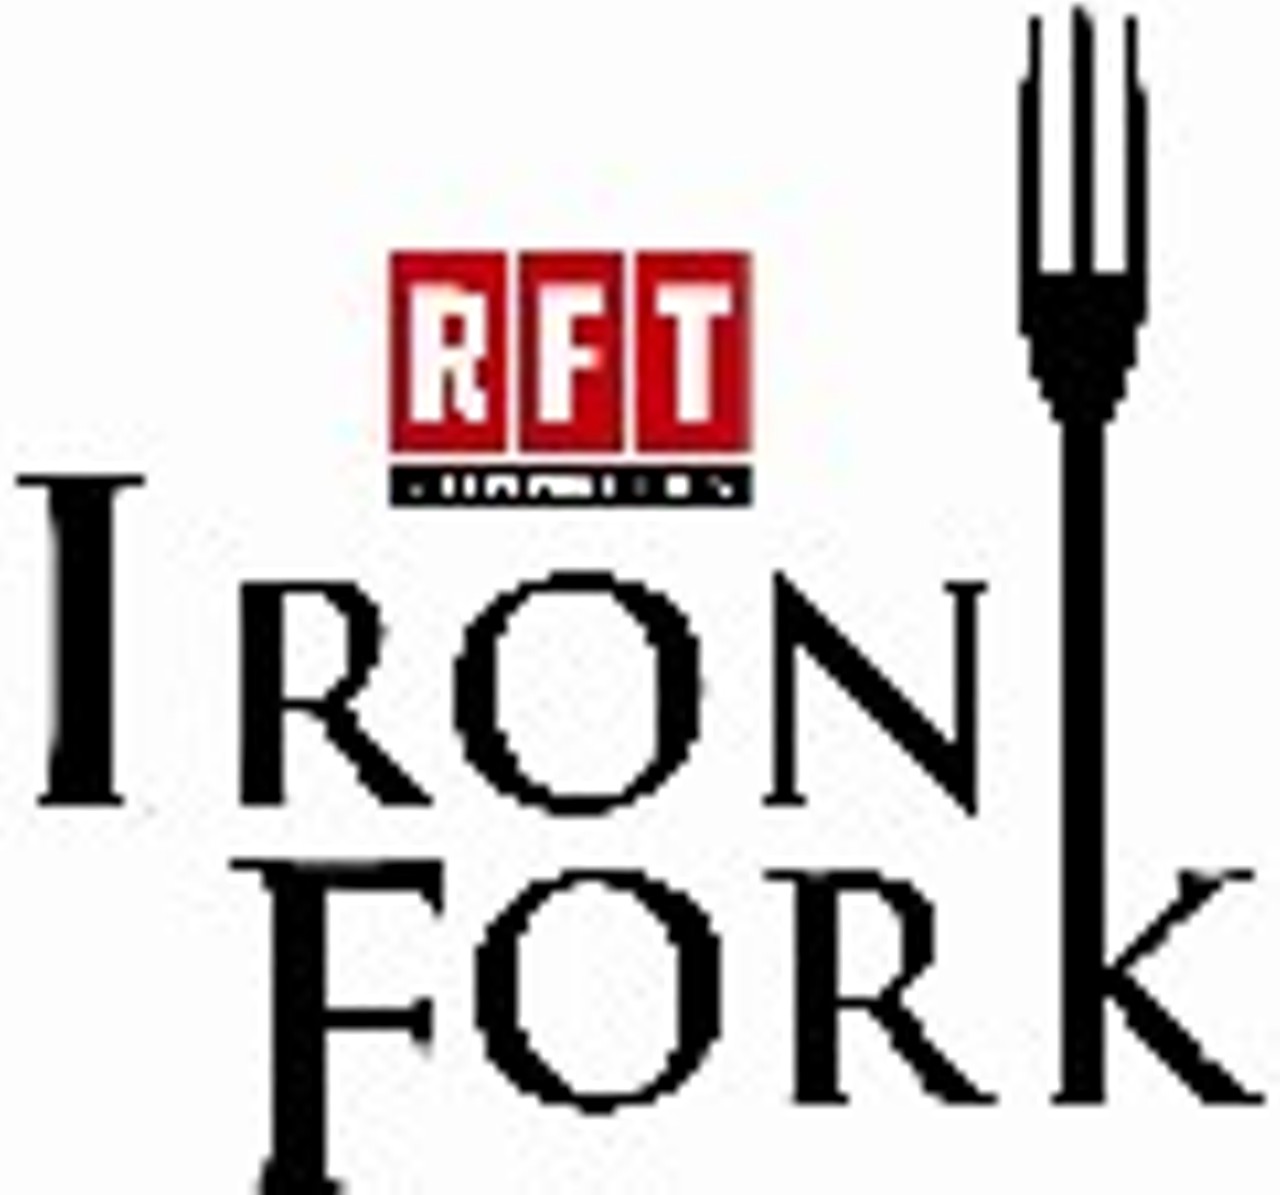 RFT Presents Iron Fork at the Ritz Carlton